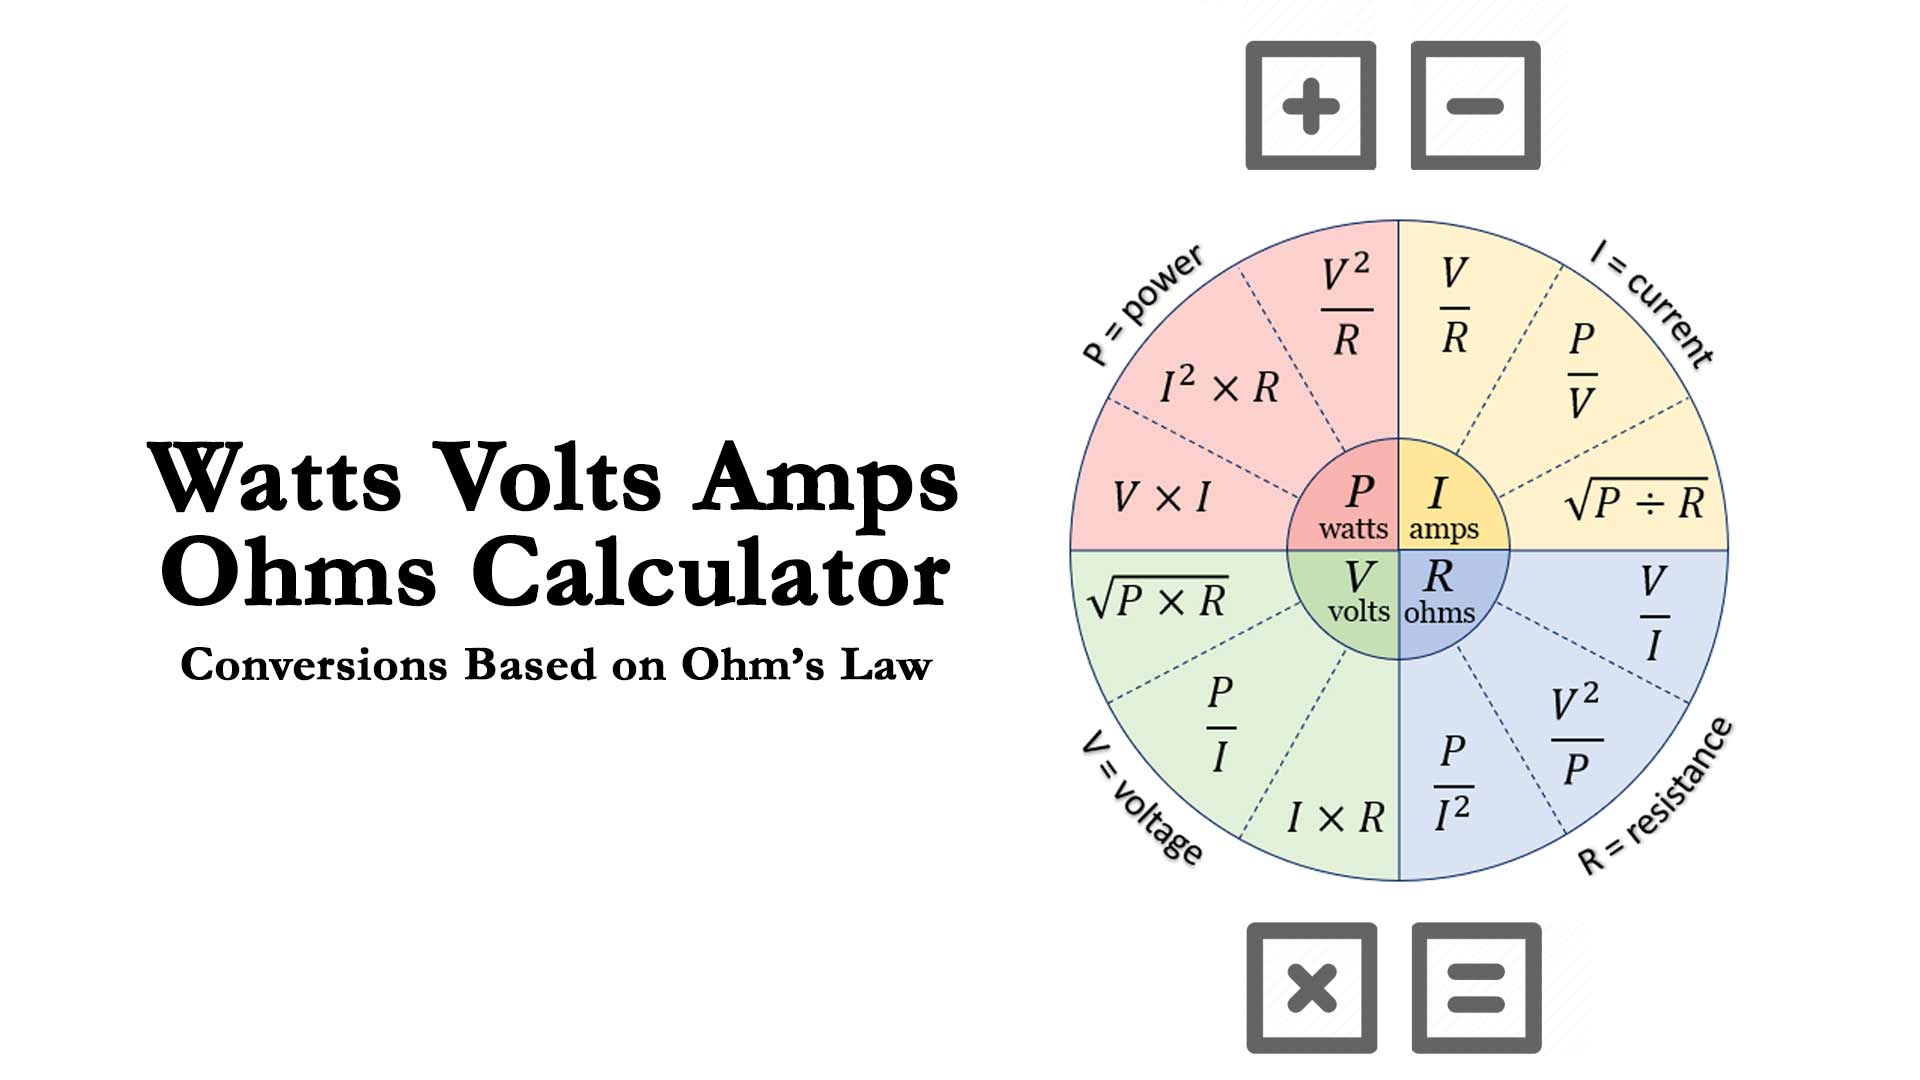 Watts Volts Amps Ohms Calculator